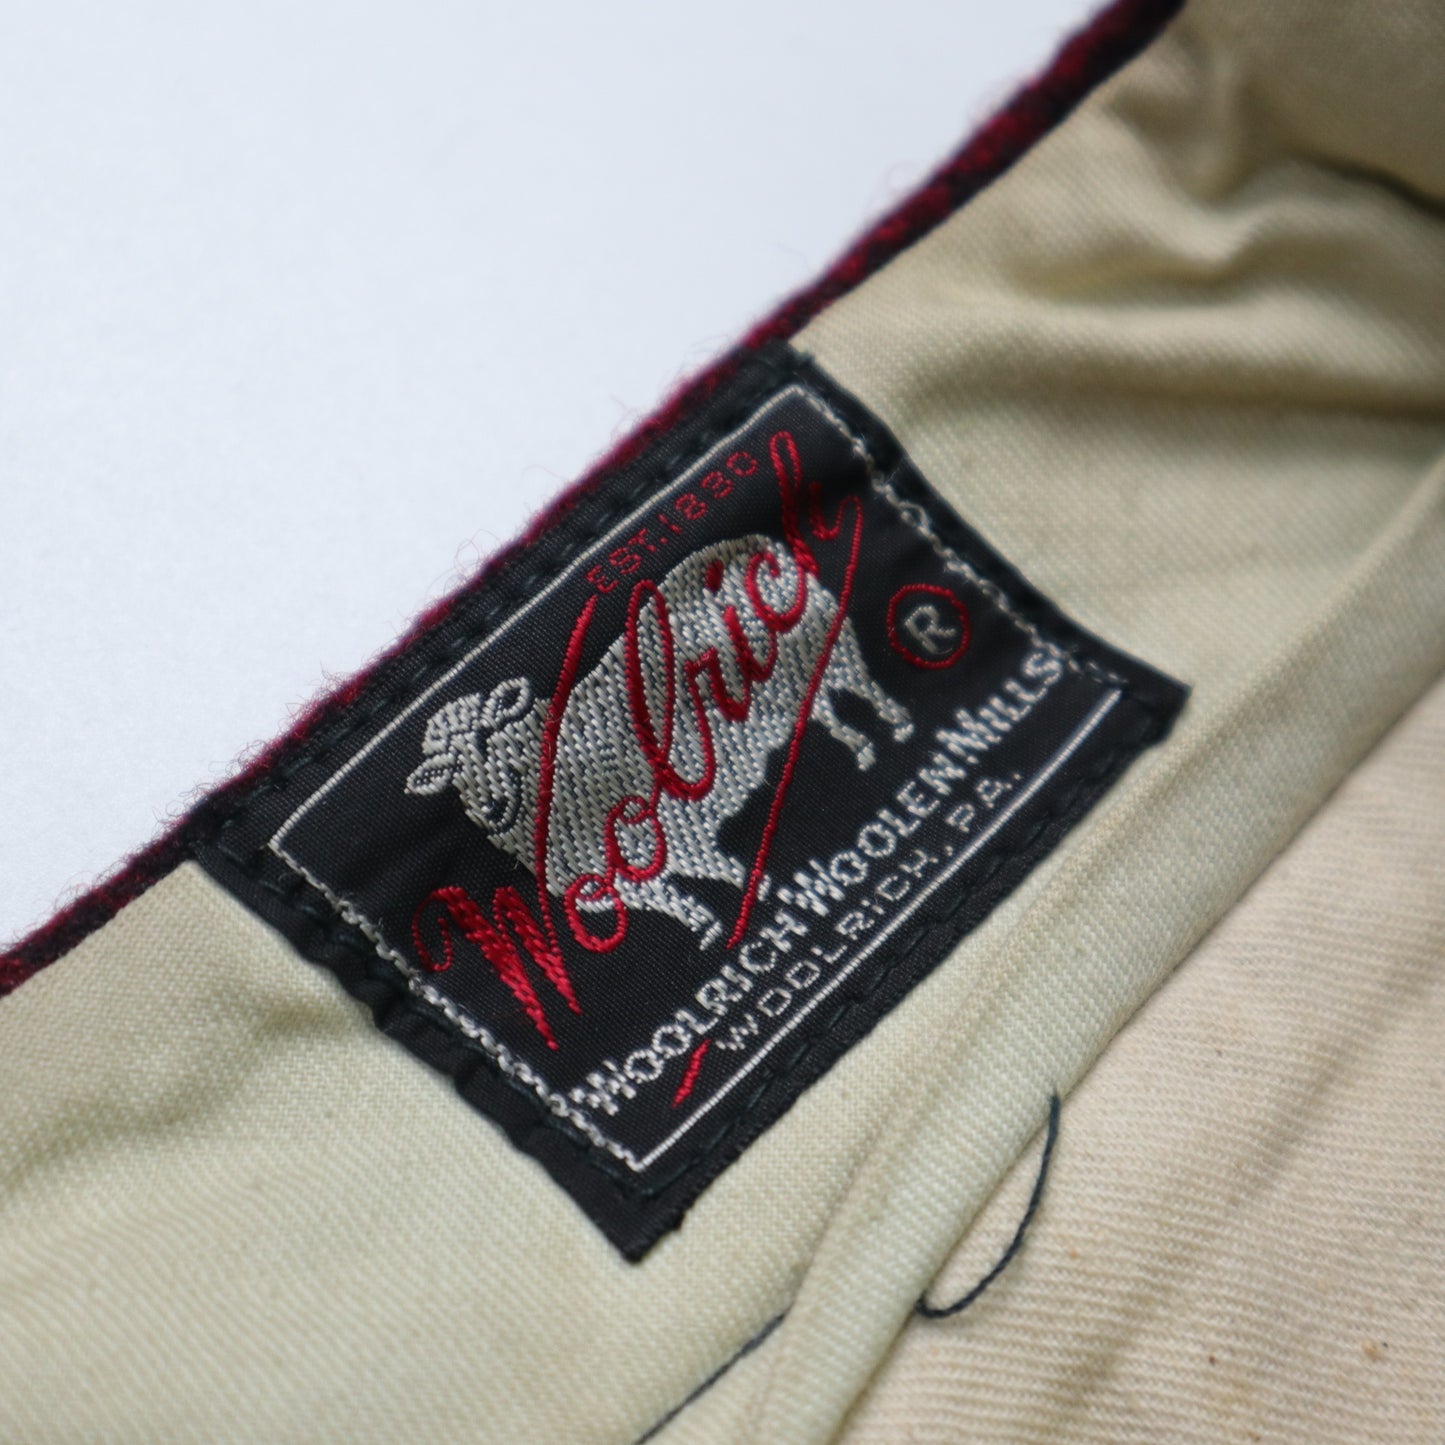 (34W)1950s Woolrich American wool red plaid hunting pants Talon zipper